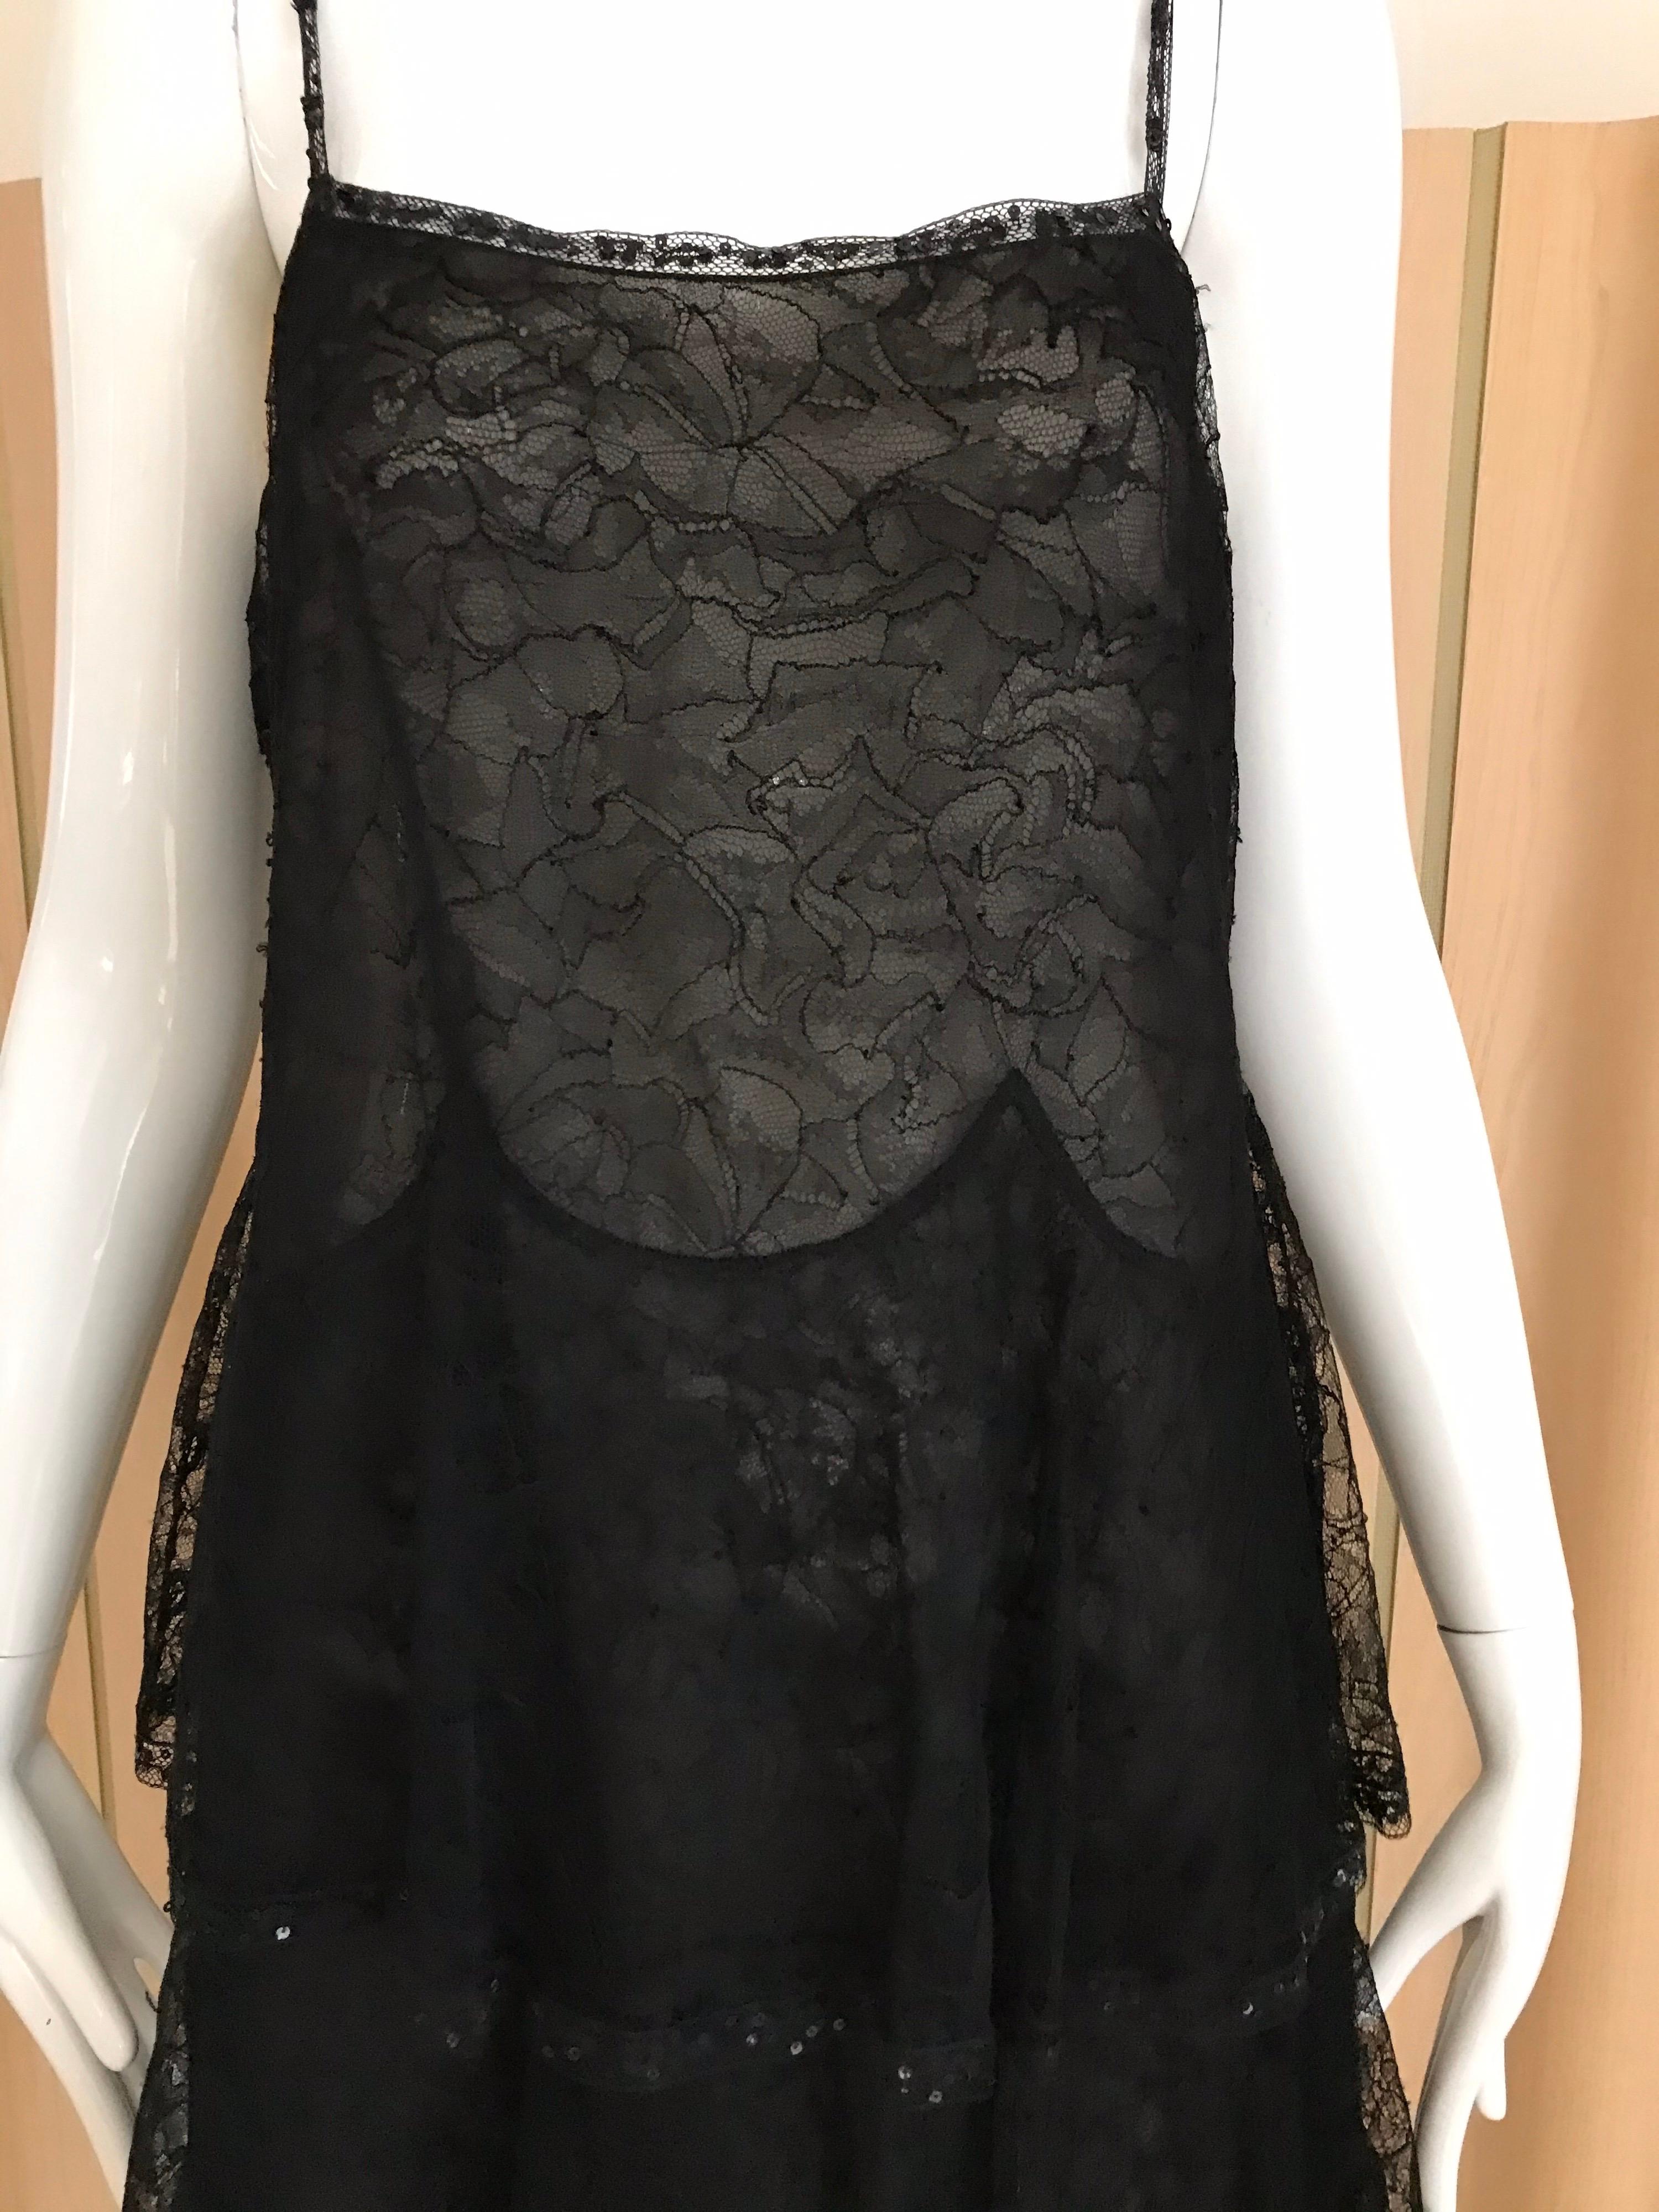 2000s CHANEL black lace silk spaghetti dress.
Marked size: 40. Fit US size 6